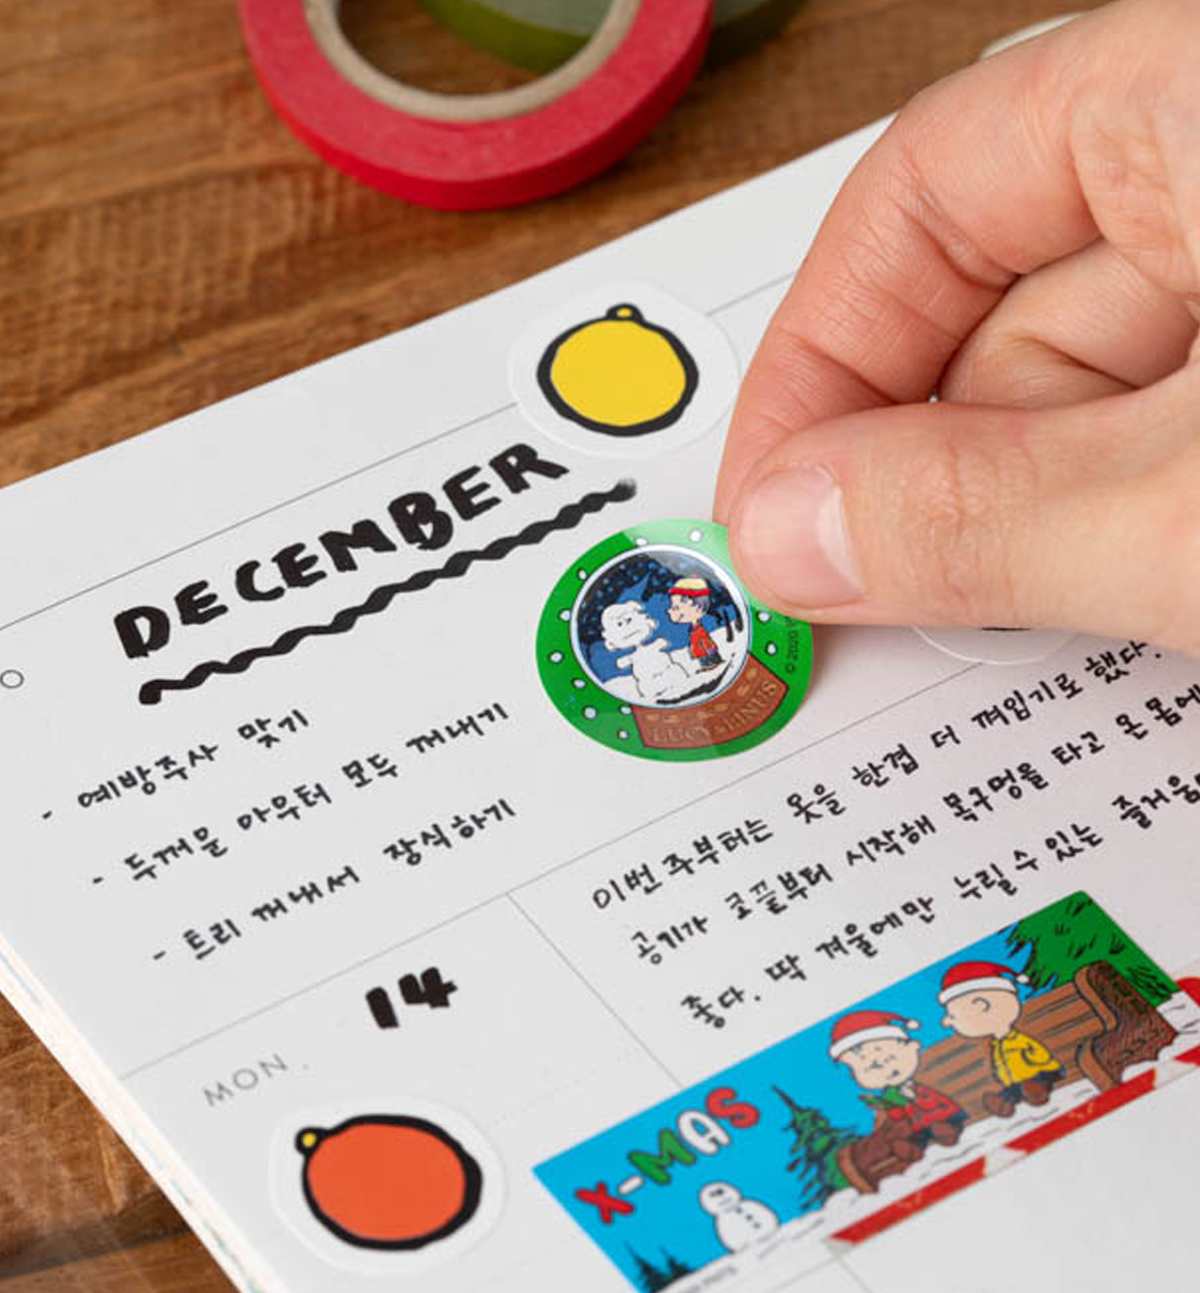 Peanuts Christmas Stickers [Snoopy]